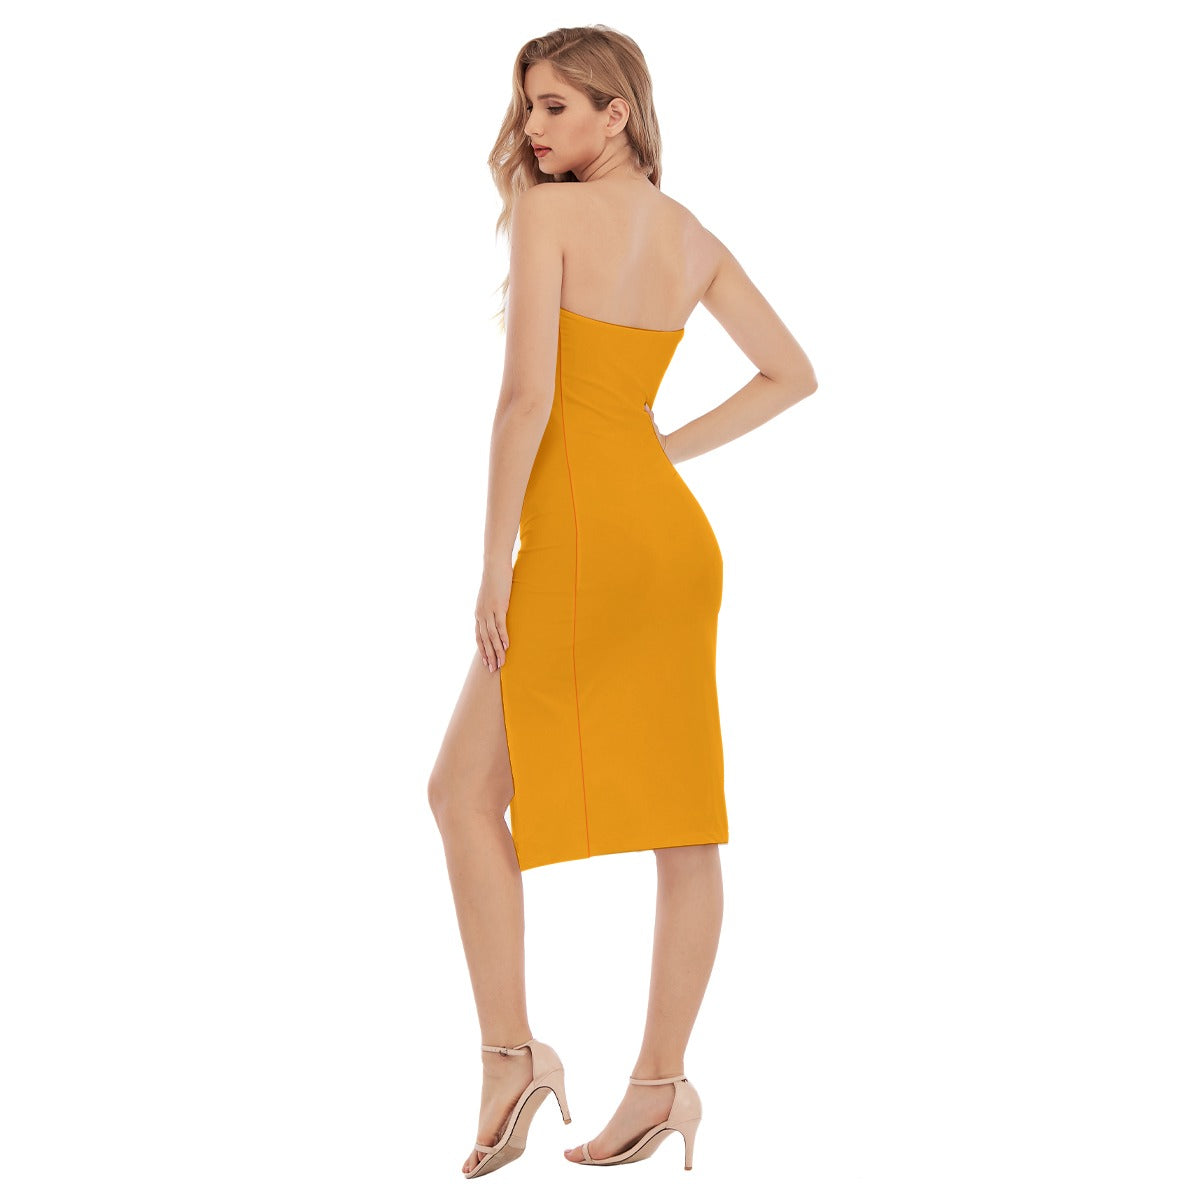 Sixty Eight 93 Logo White Orange Women's Side Split Tube Top Dress